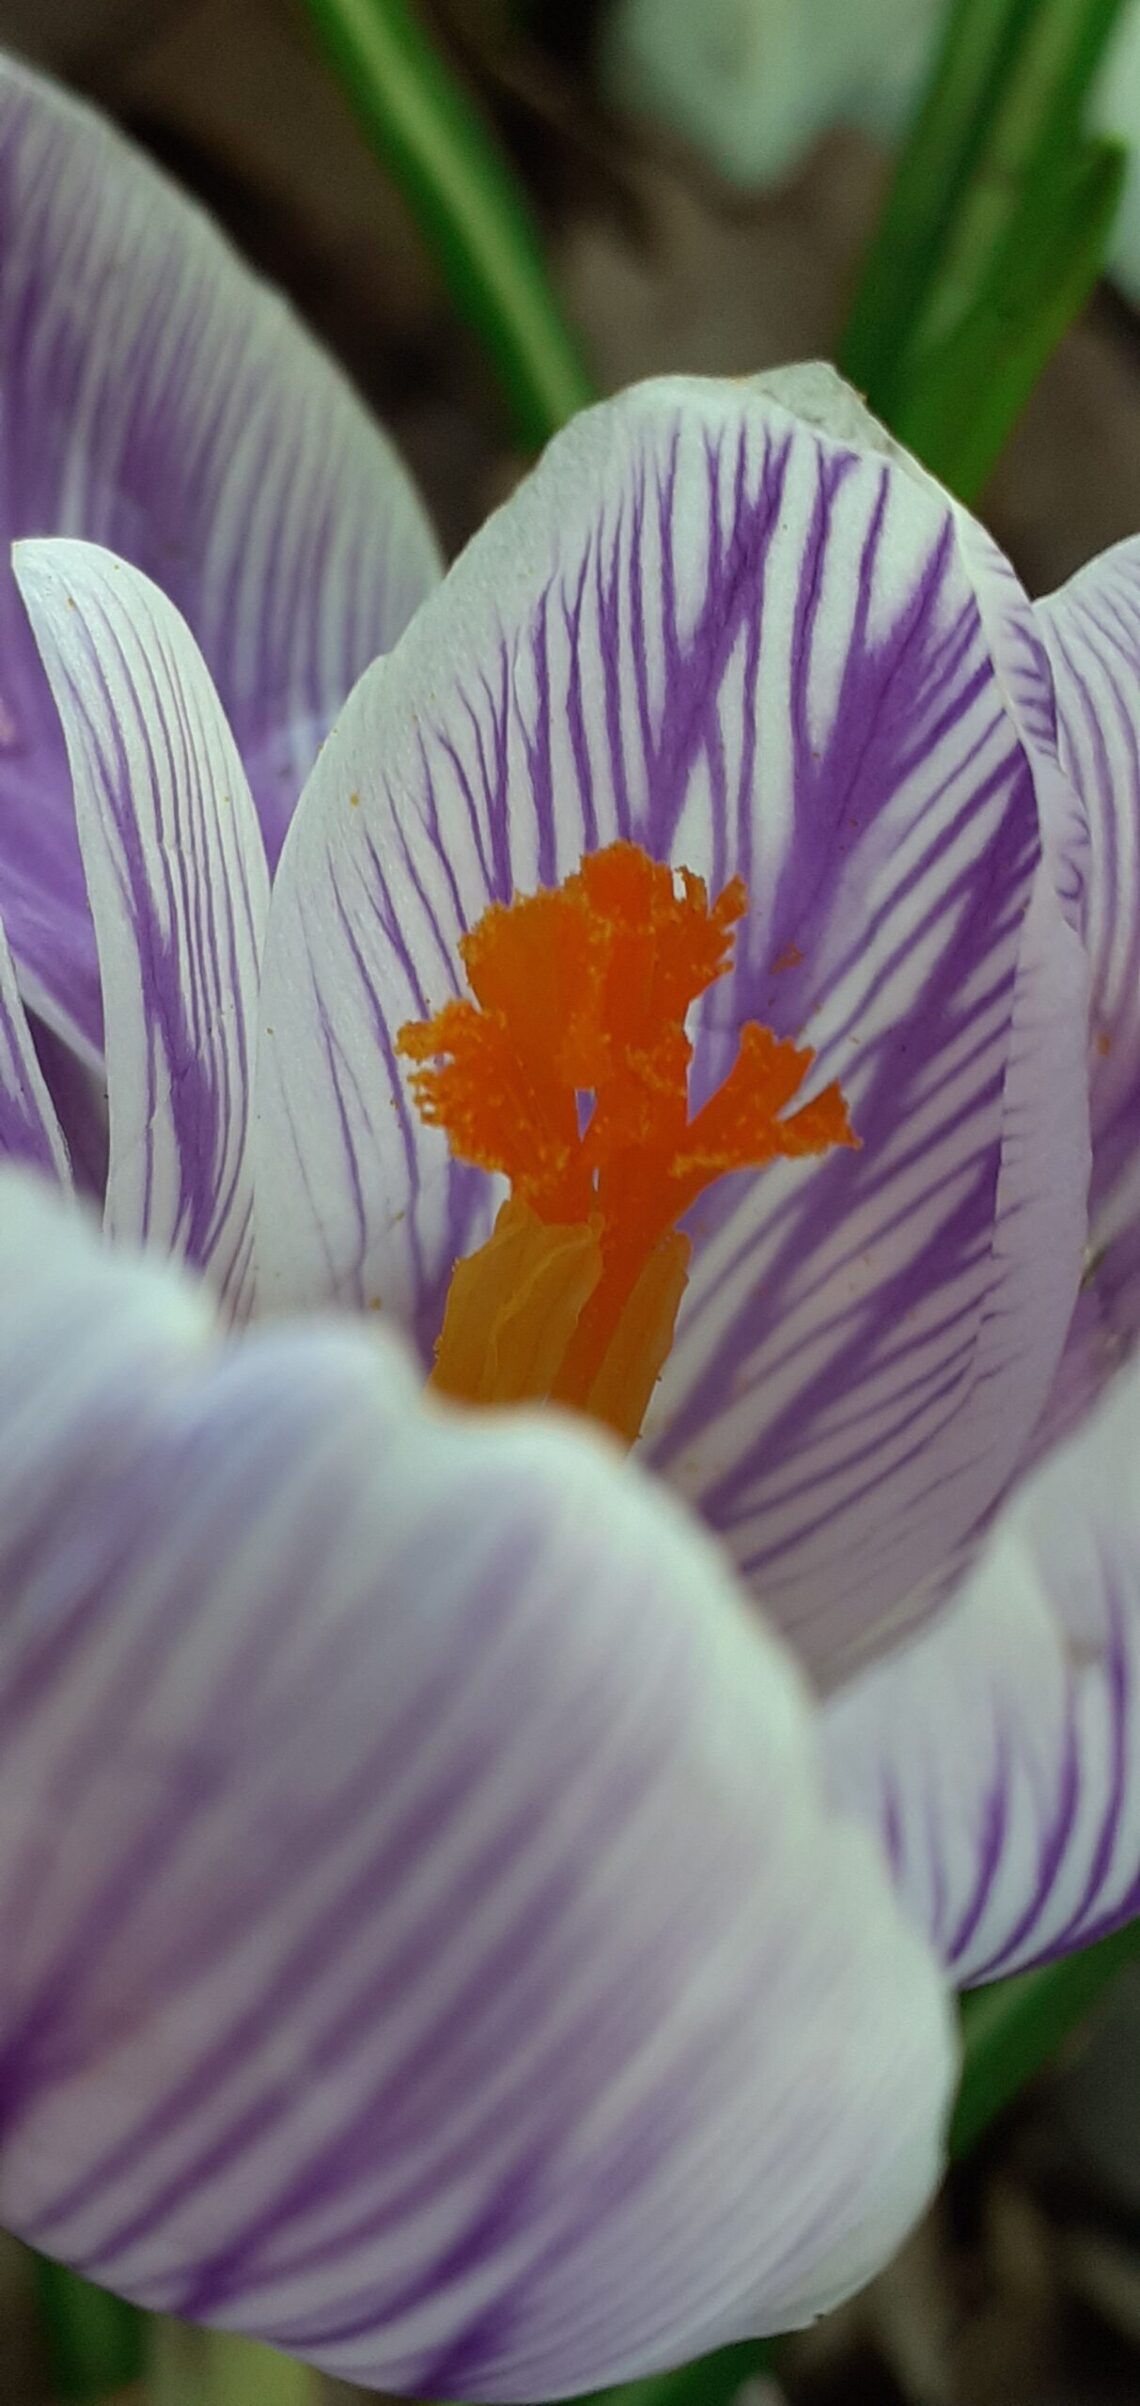 Purple crocus delicately flowers